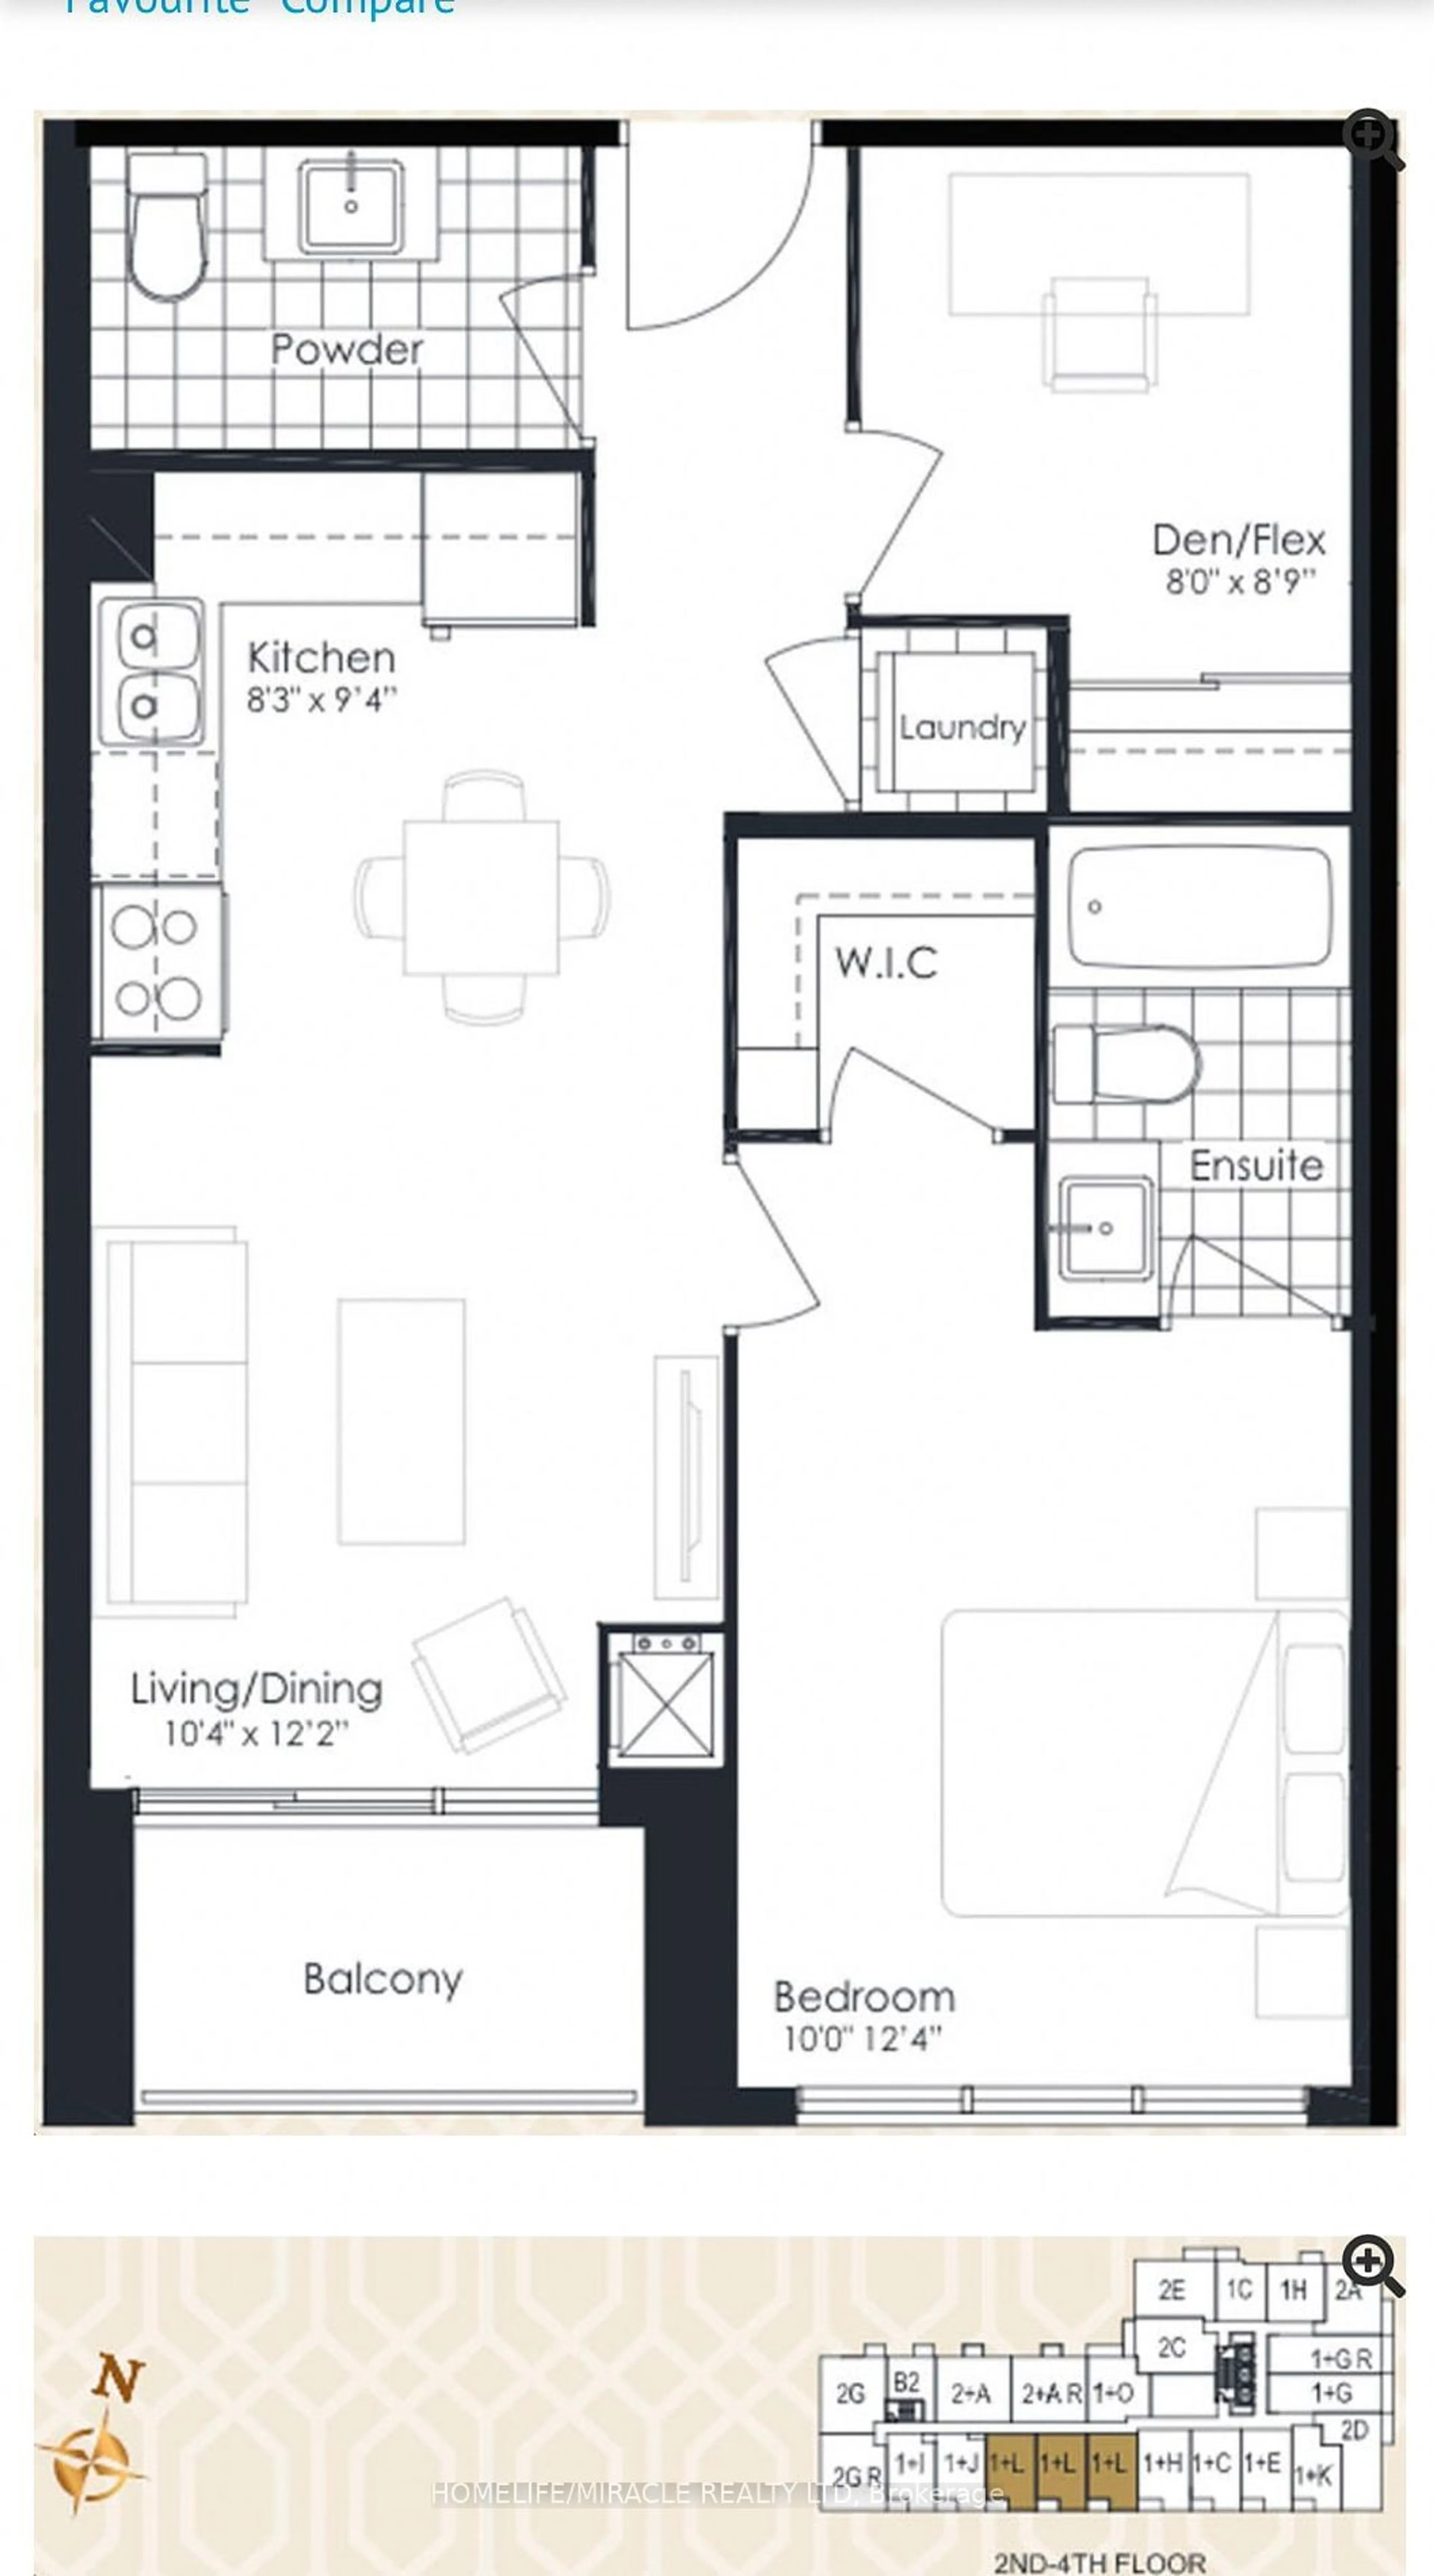 Floor plan for 3220 Sheppard Ave #413, Toronto Ontario M1T 3K3